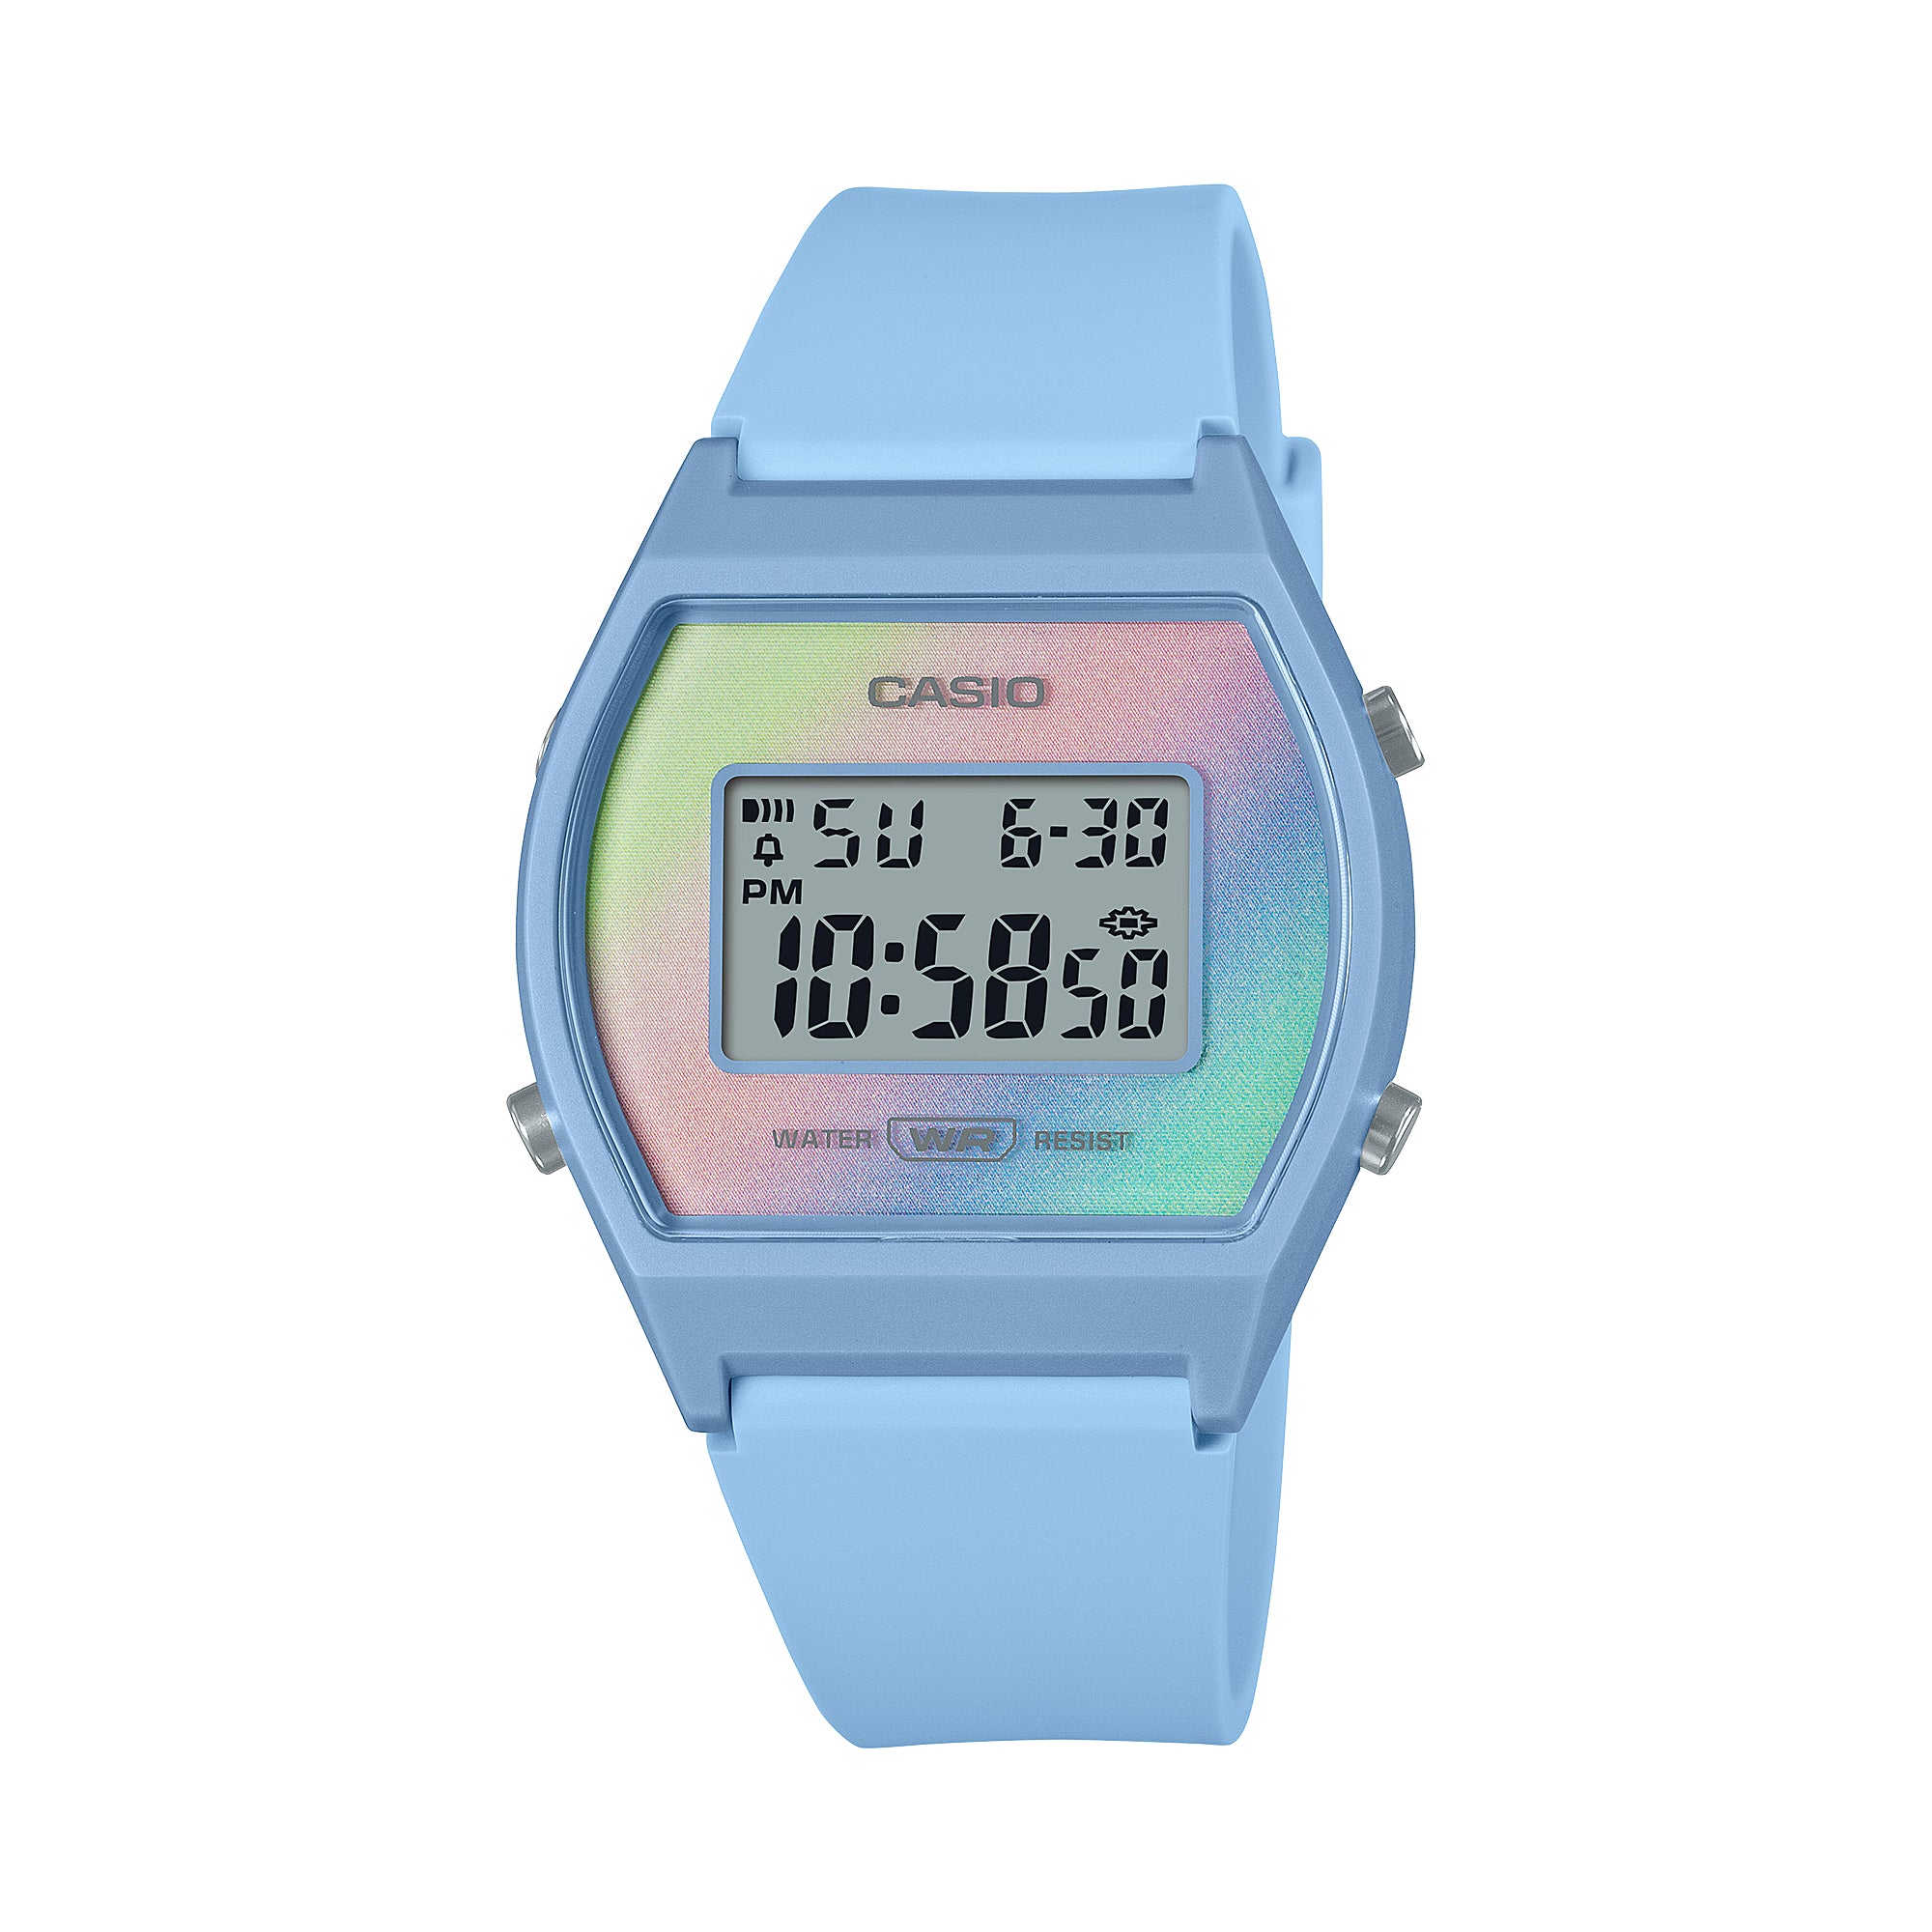 Casio Pop Series Digital Watch LW205H-2A LW-205H-2A [Kids]